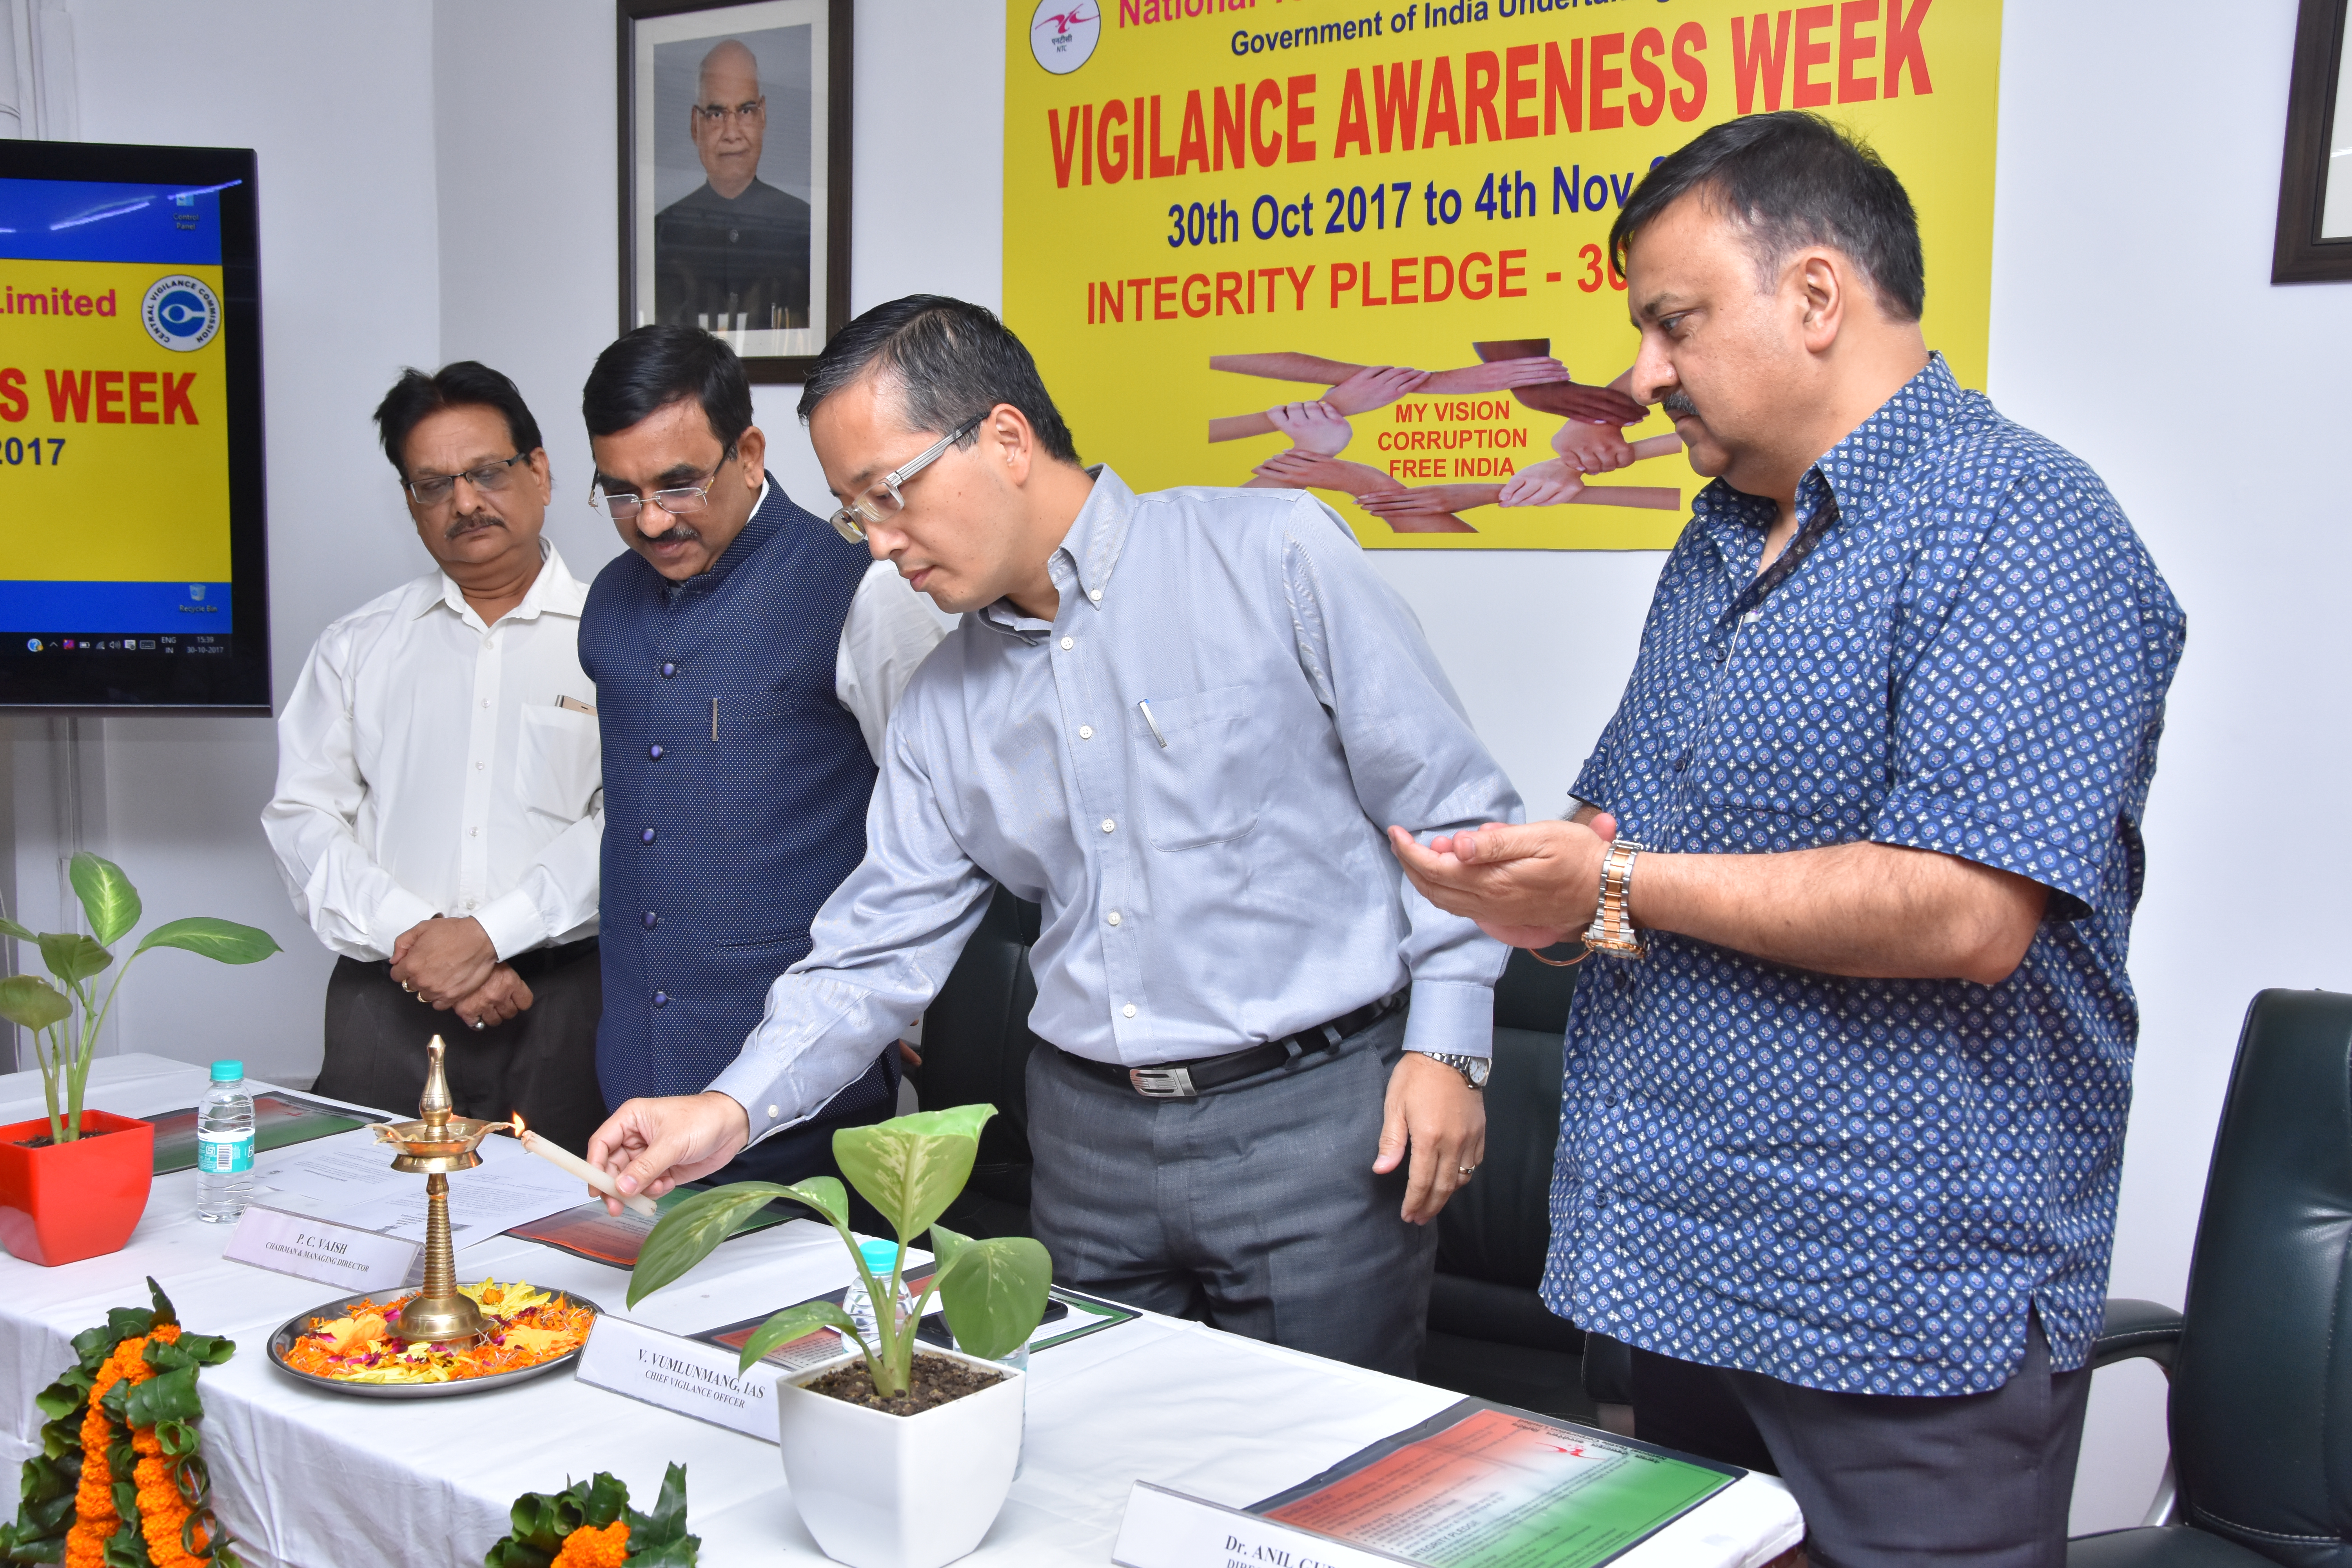 Observance of Vigilance Awareness Week 2017